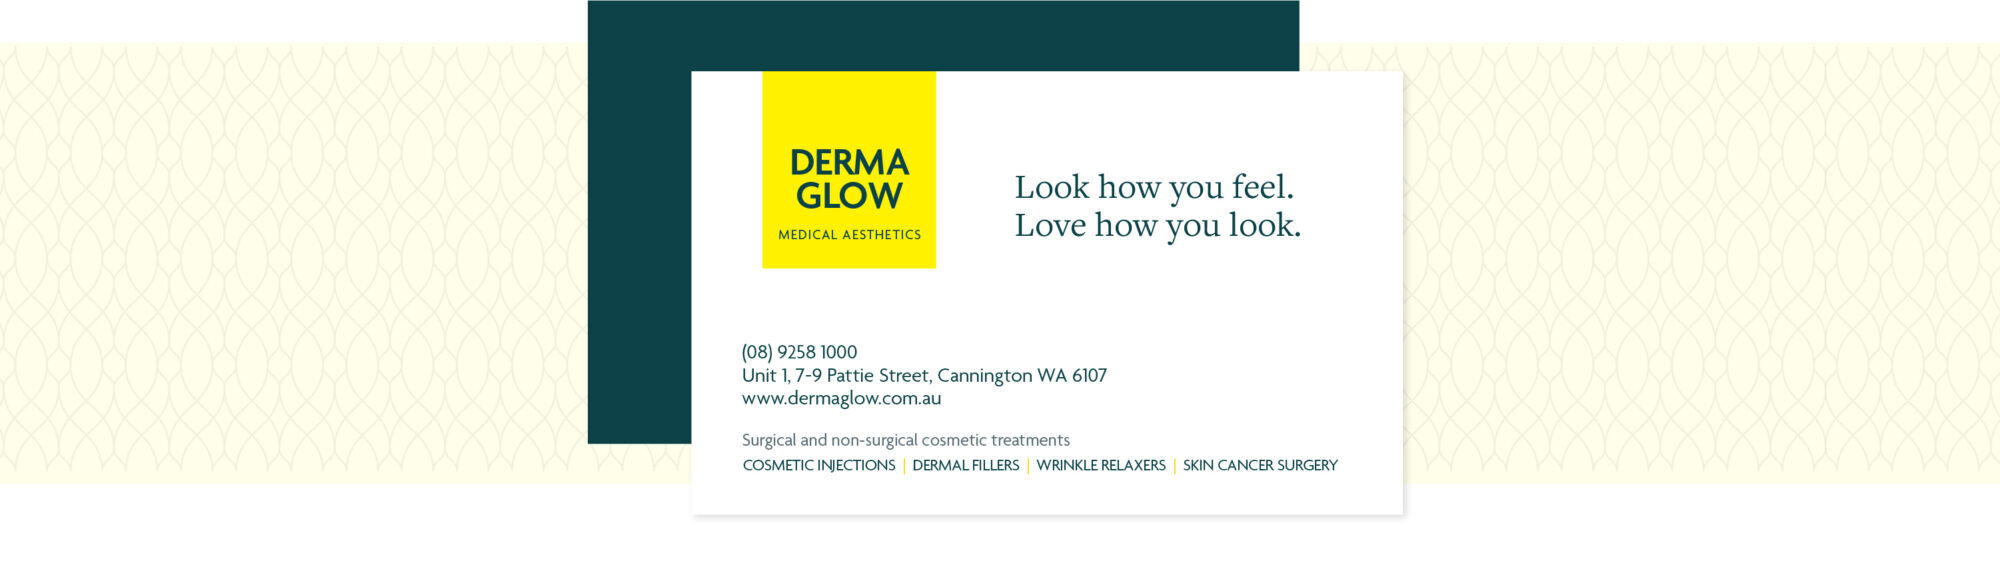 Derma Glow Branding